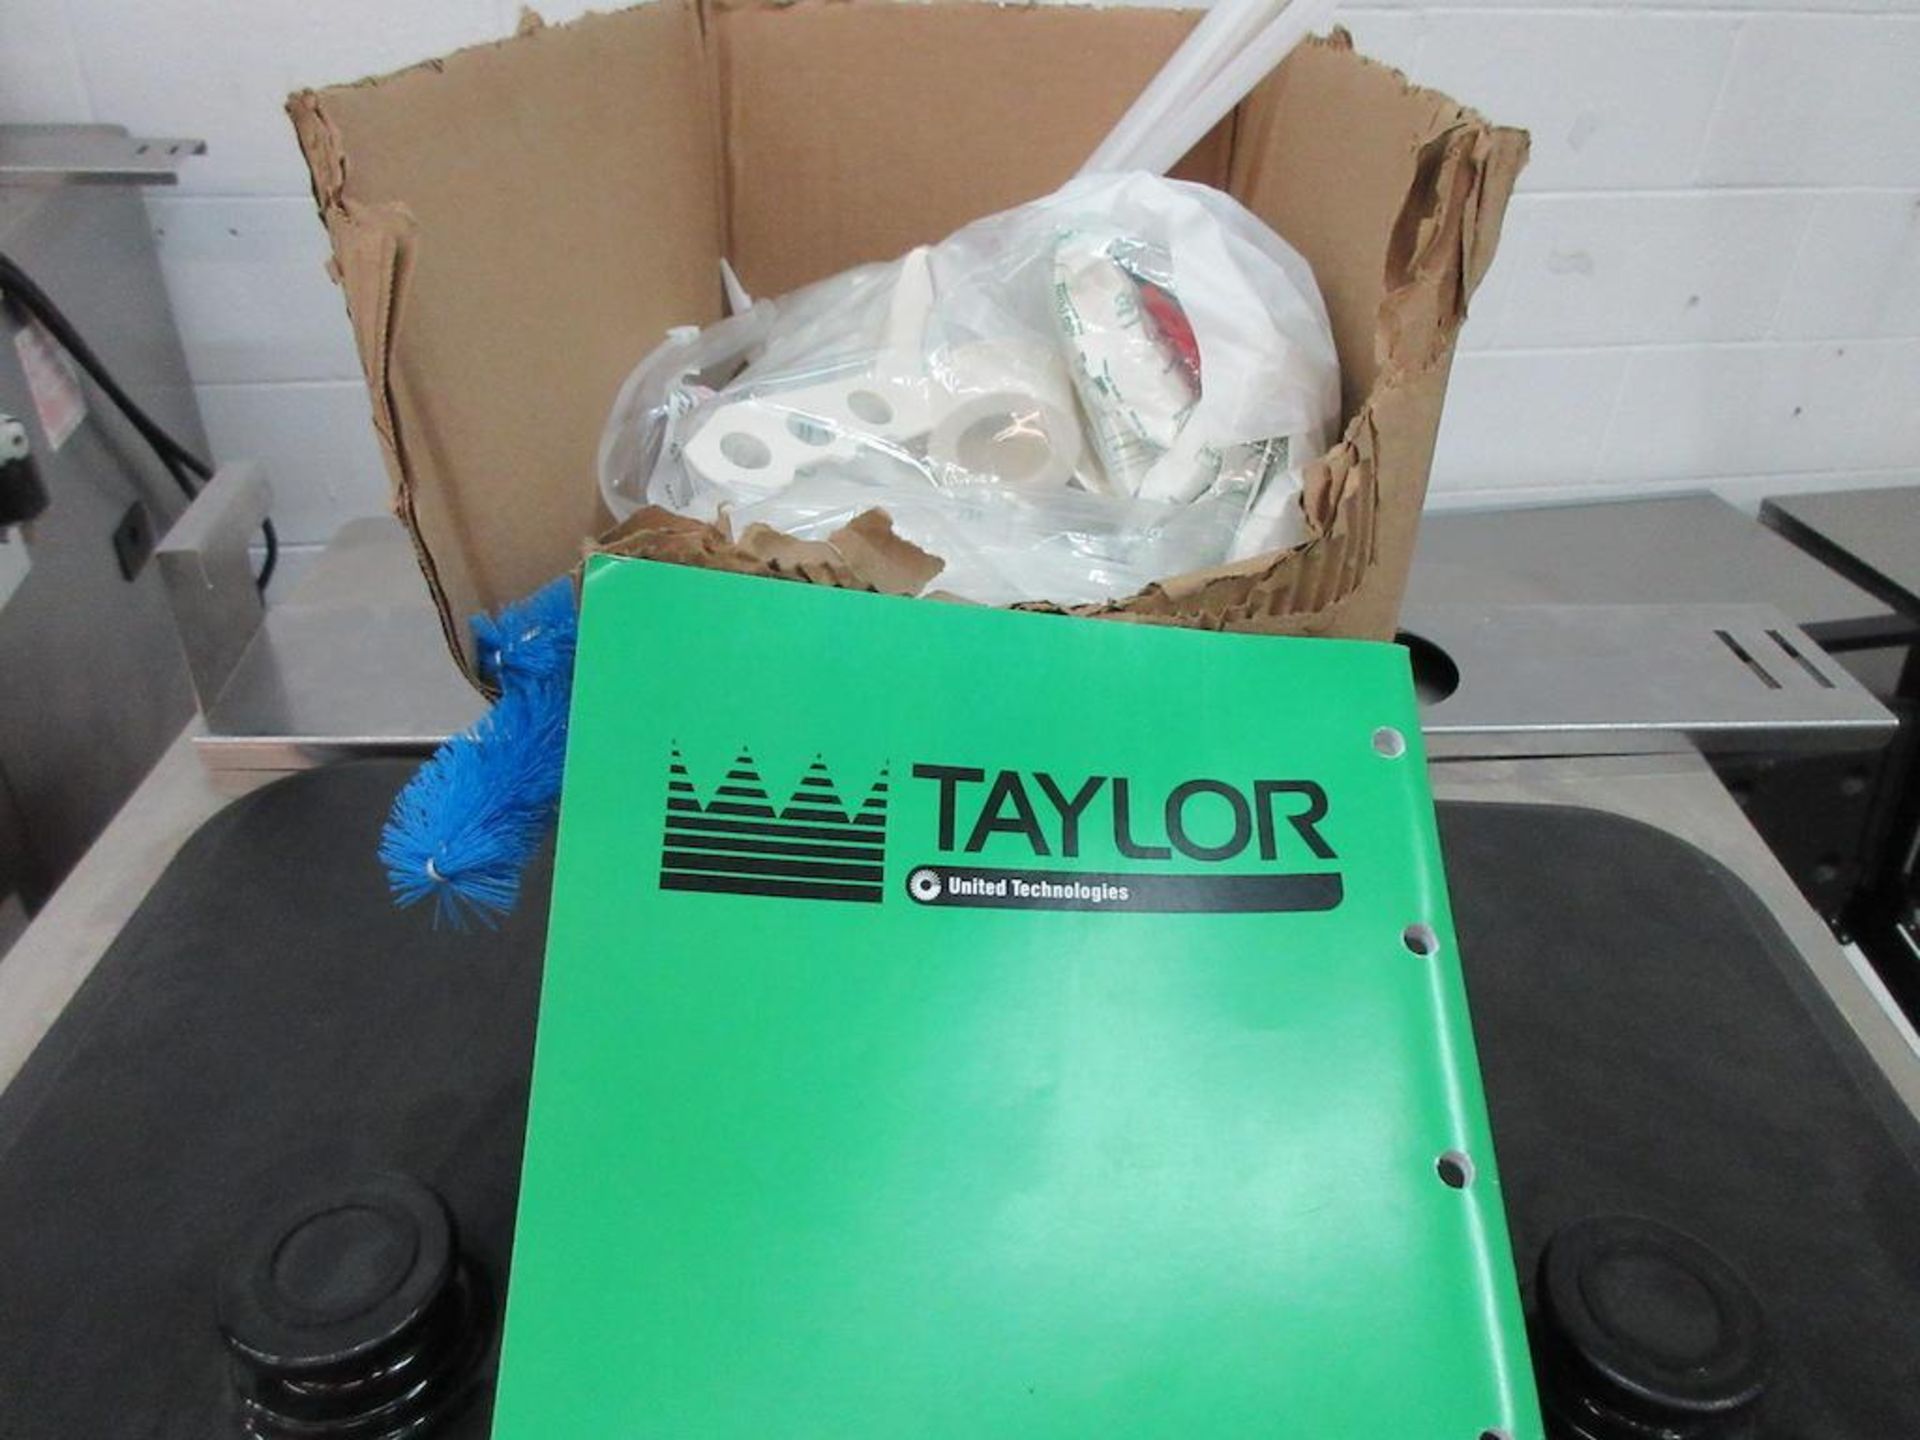 2015 Taylor model C713-33 soft serve freezer, twin twist, air cooled, 3 ph, sn M5072305 - Image 7 of 7